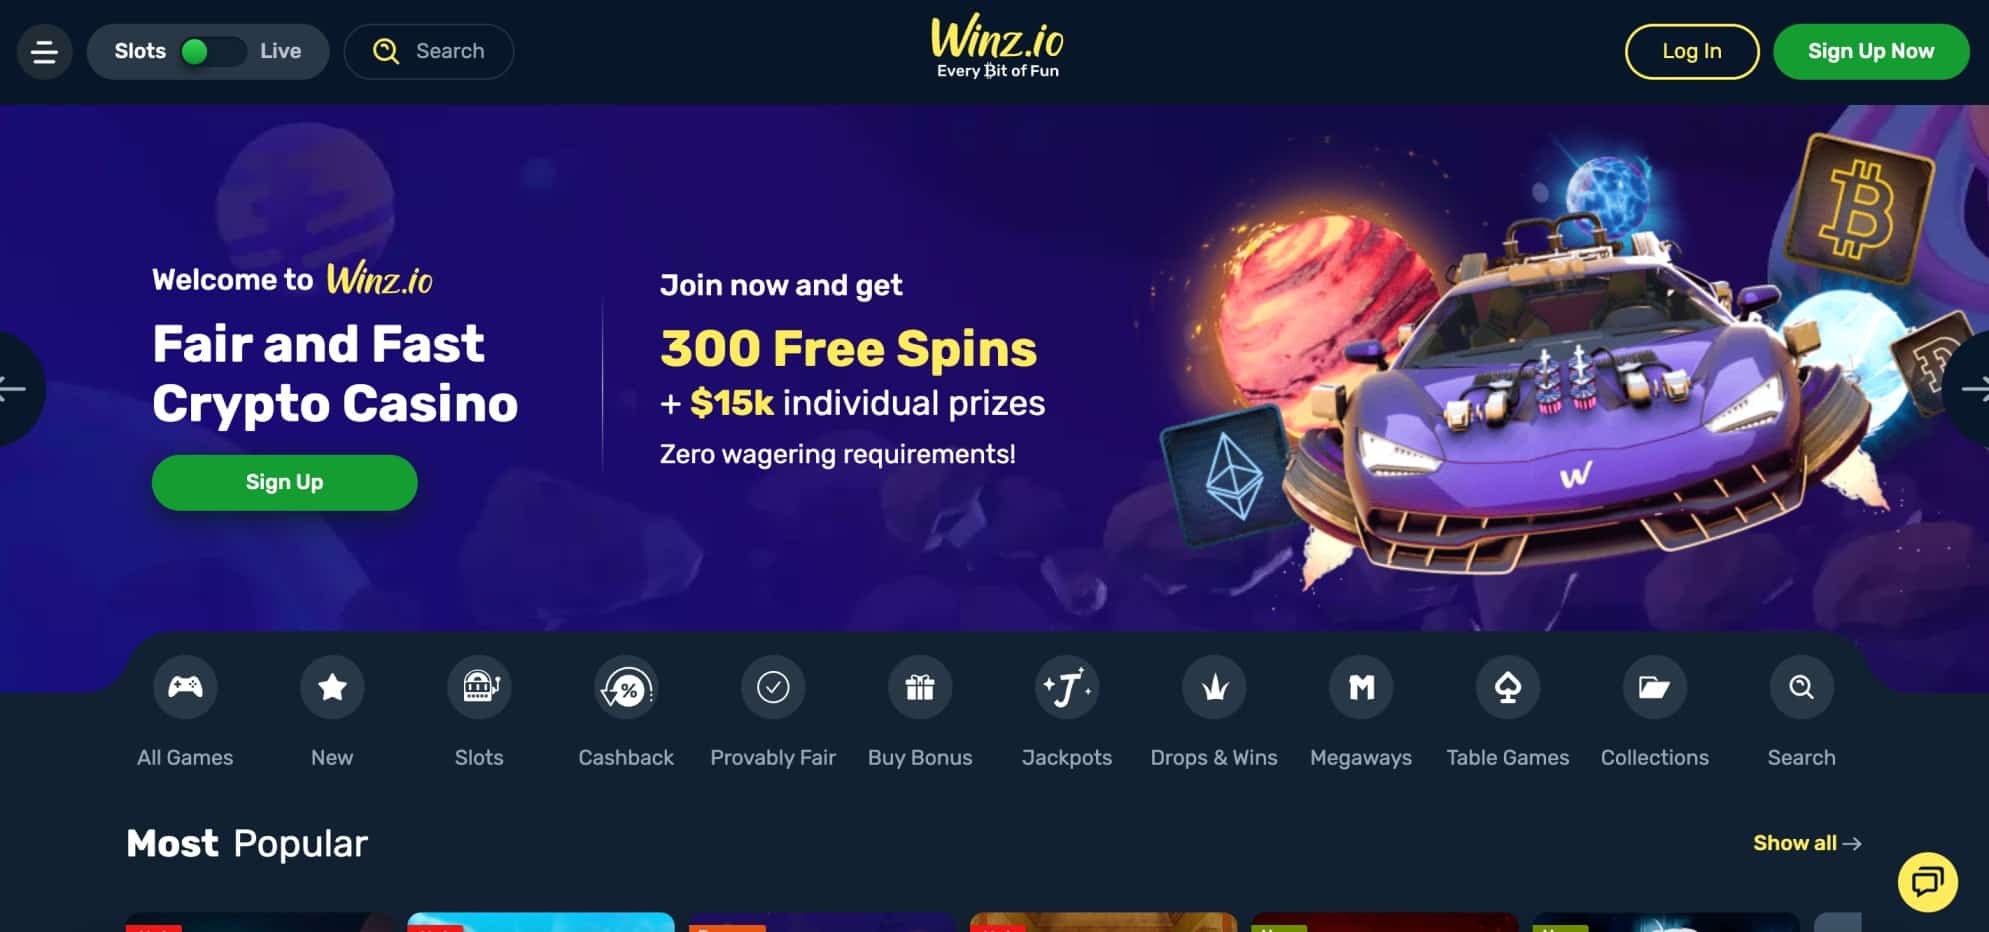 Winz.io - Bitcoin Casino Malaysia